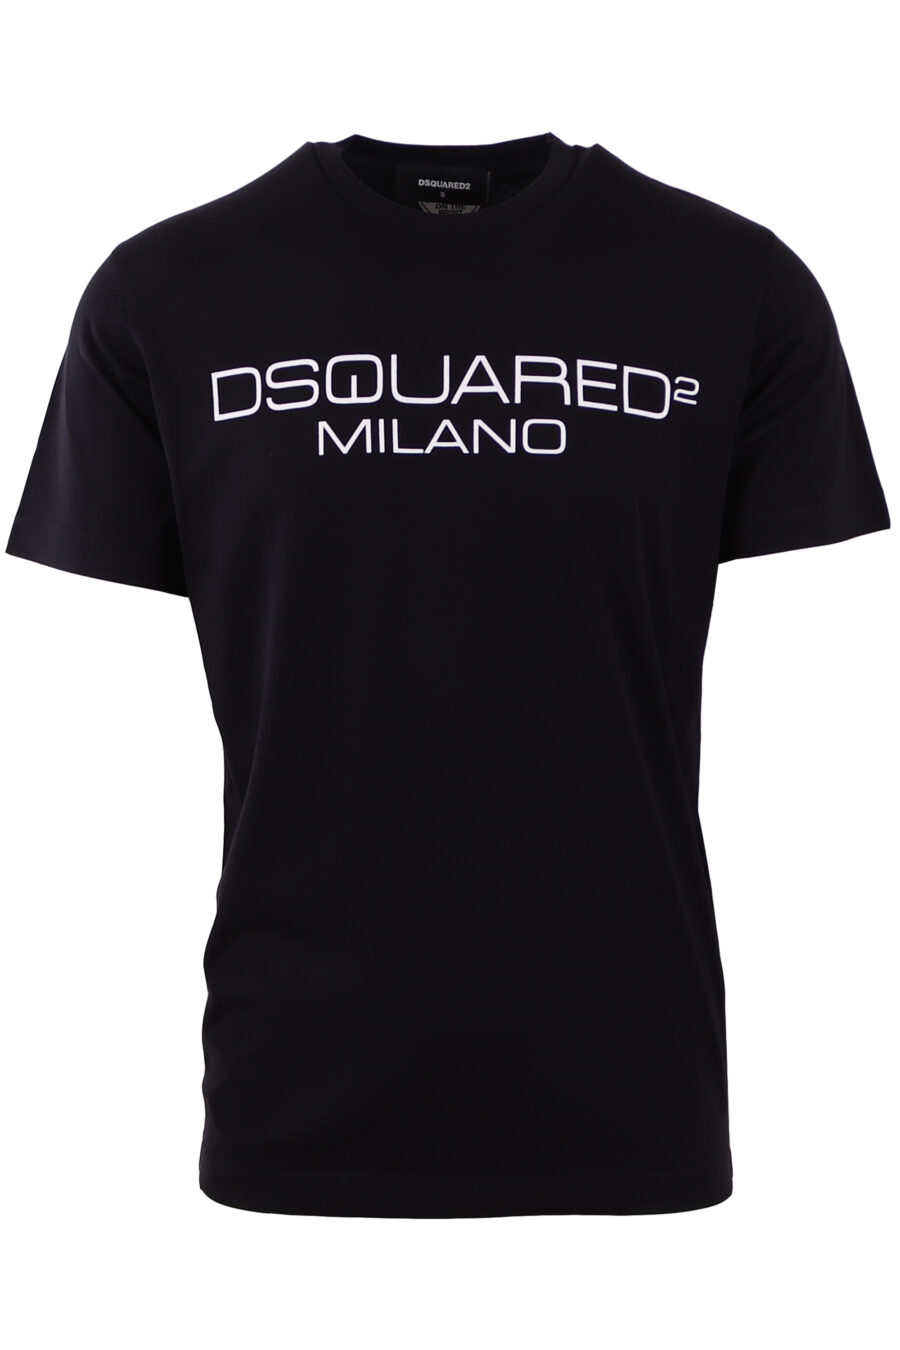 Camiseta negra con maxilogo "milano" - IMG 3580